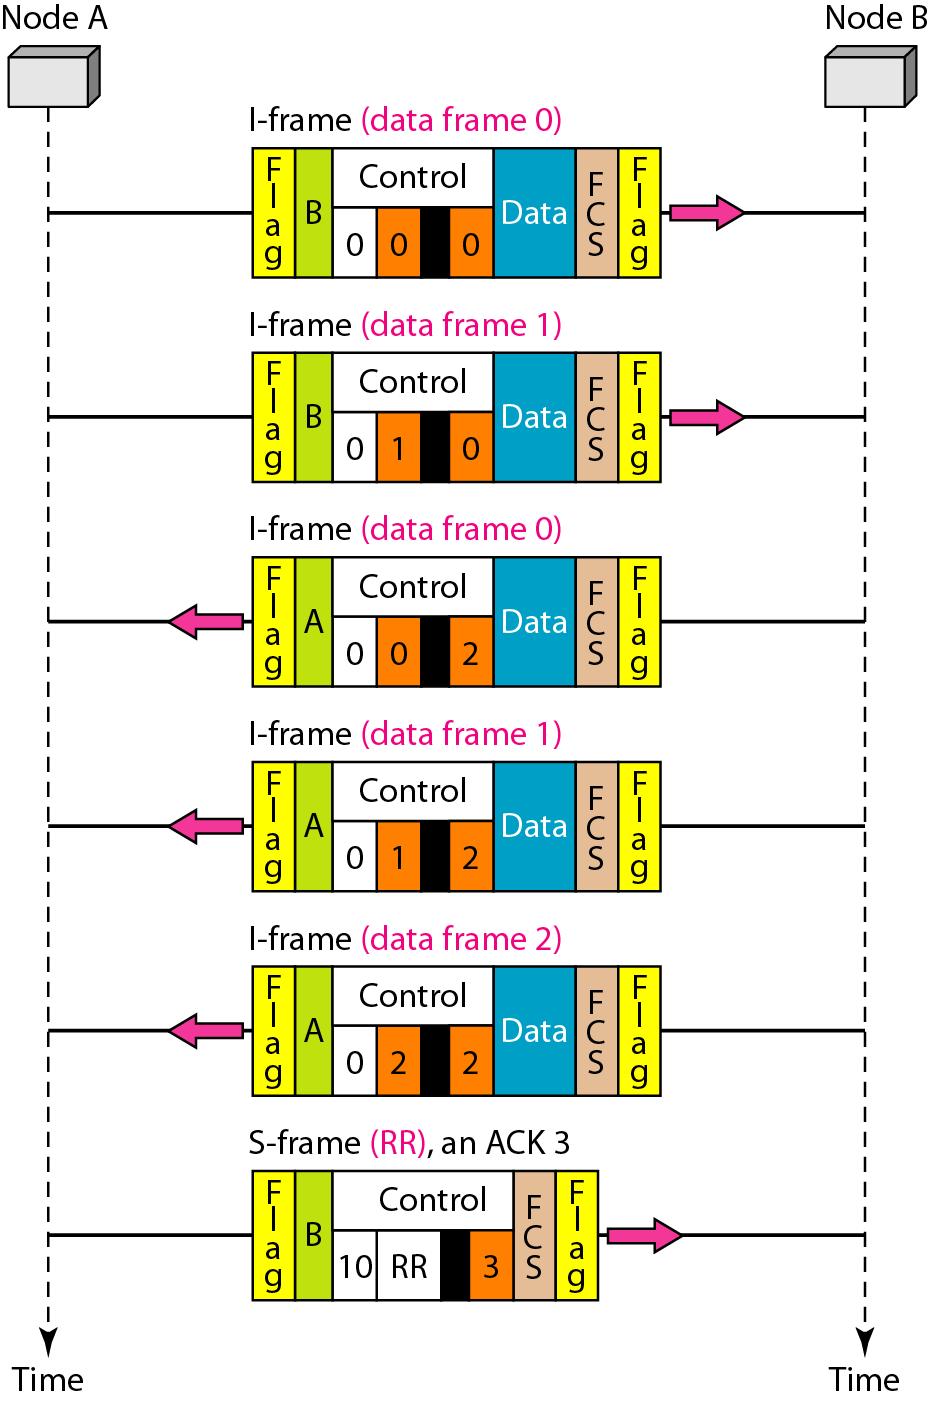 Node A asks for a connection with a set asynchronous balanced mode (SABM) frame; node B gives a positive response with